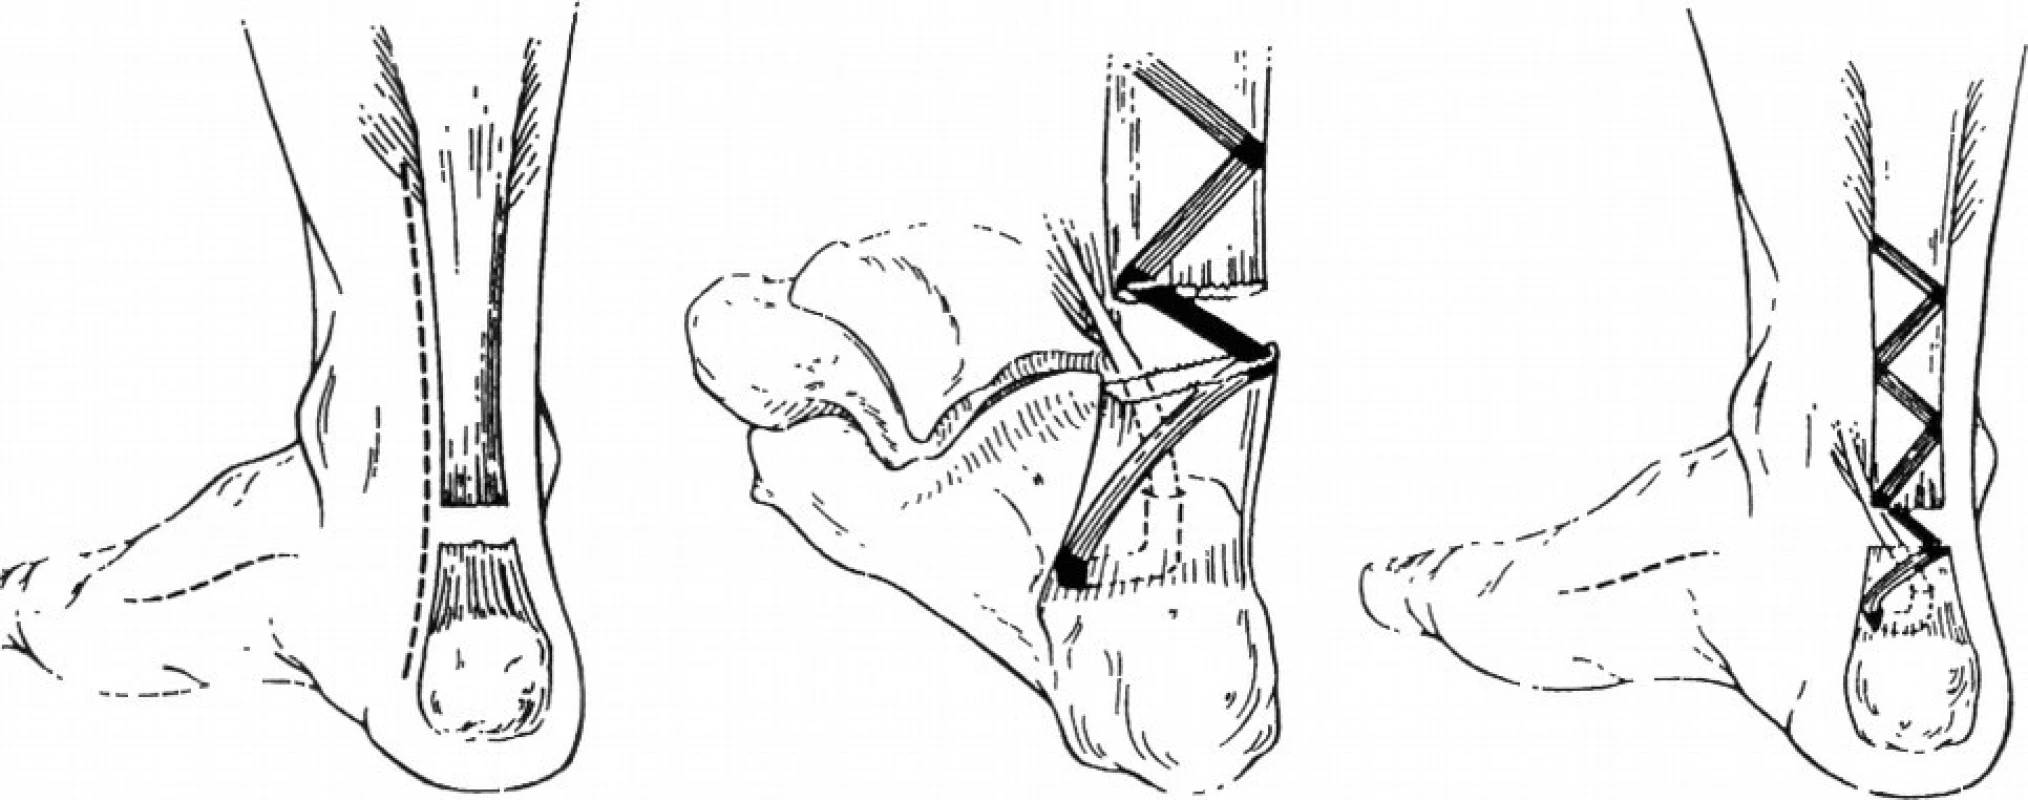 Plastika dle Keith L. Wapnera [15]
(Volně podle Wapner, K.L., Pavlock, G.S., Hecht, P.J., Naselli, F., Walther, R. Repair of chronic Achilles tendon rupture with flexor hallucis longus tendon transfer. Foot Ankle, 14, 443–449, 1993)